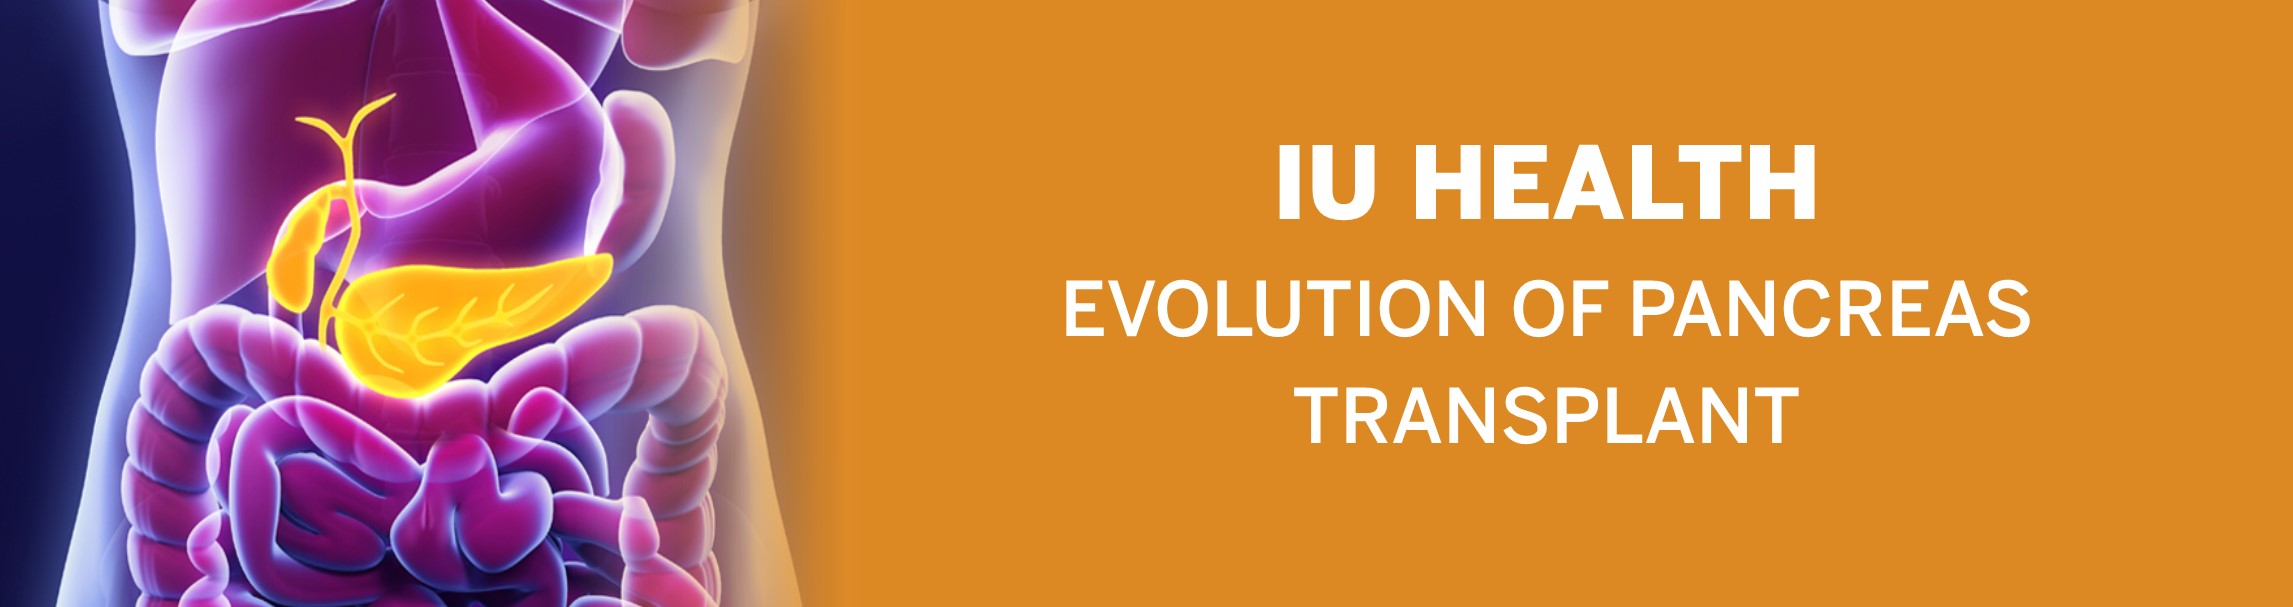 IU Health The Evolution of Pancreas Transplantation Banner